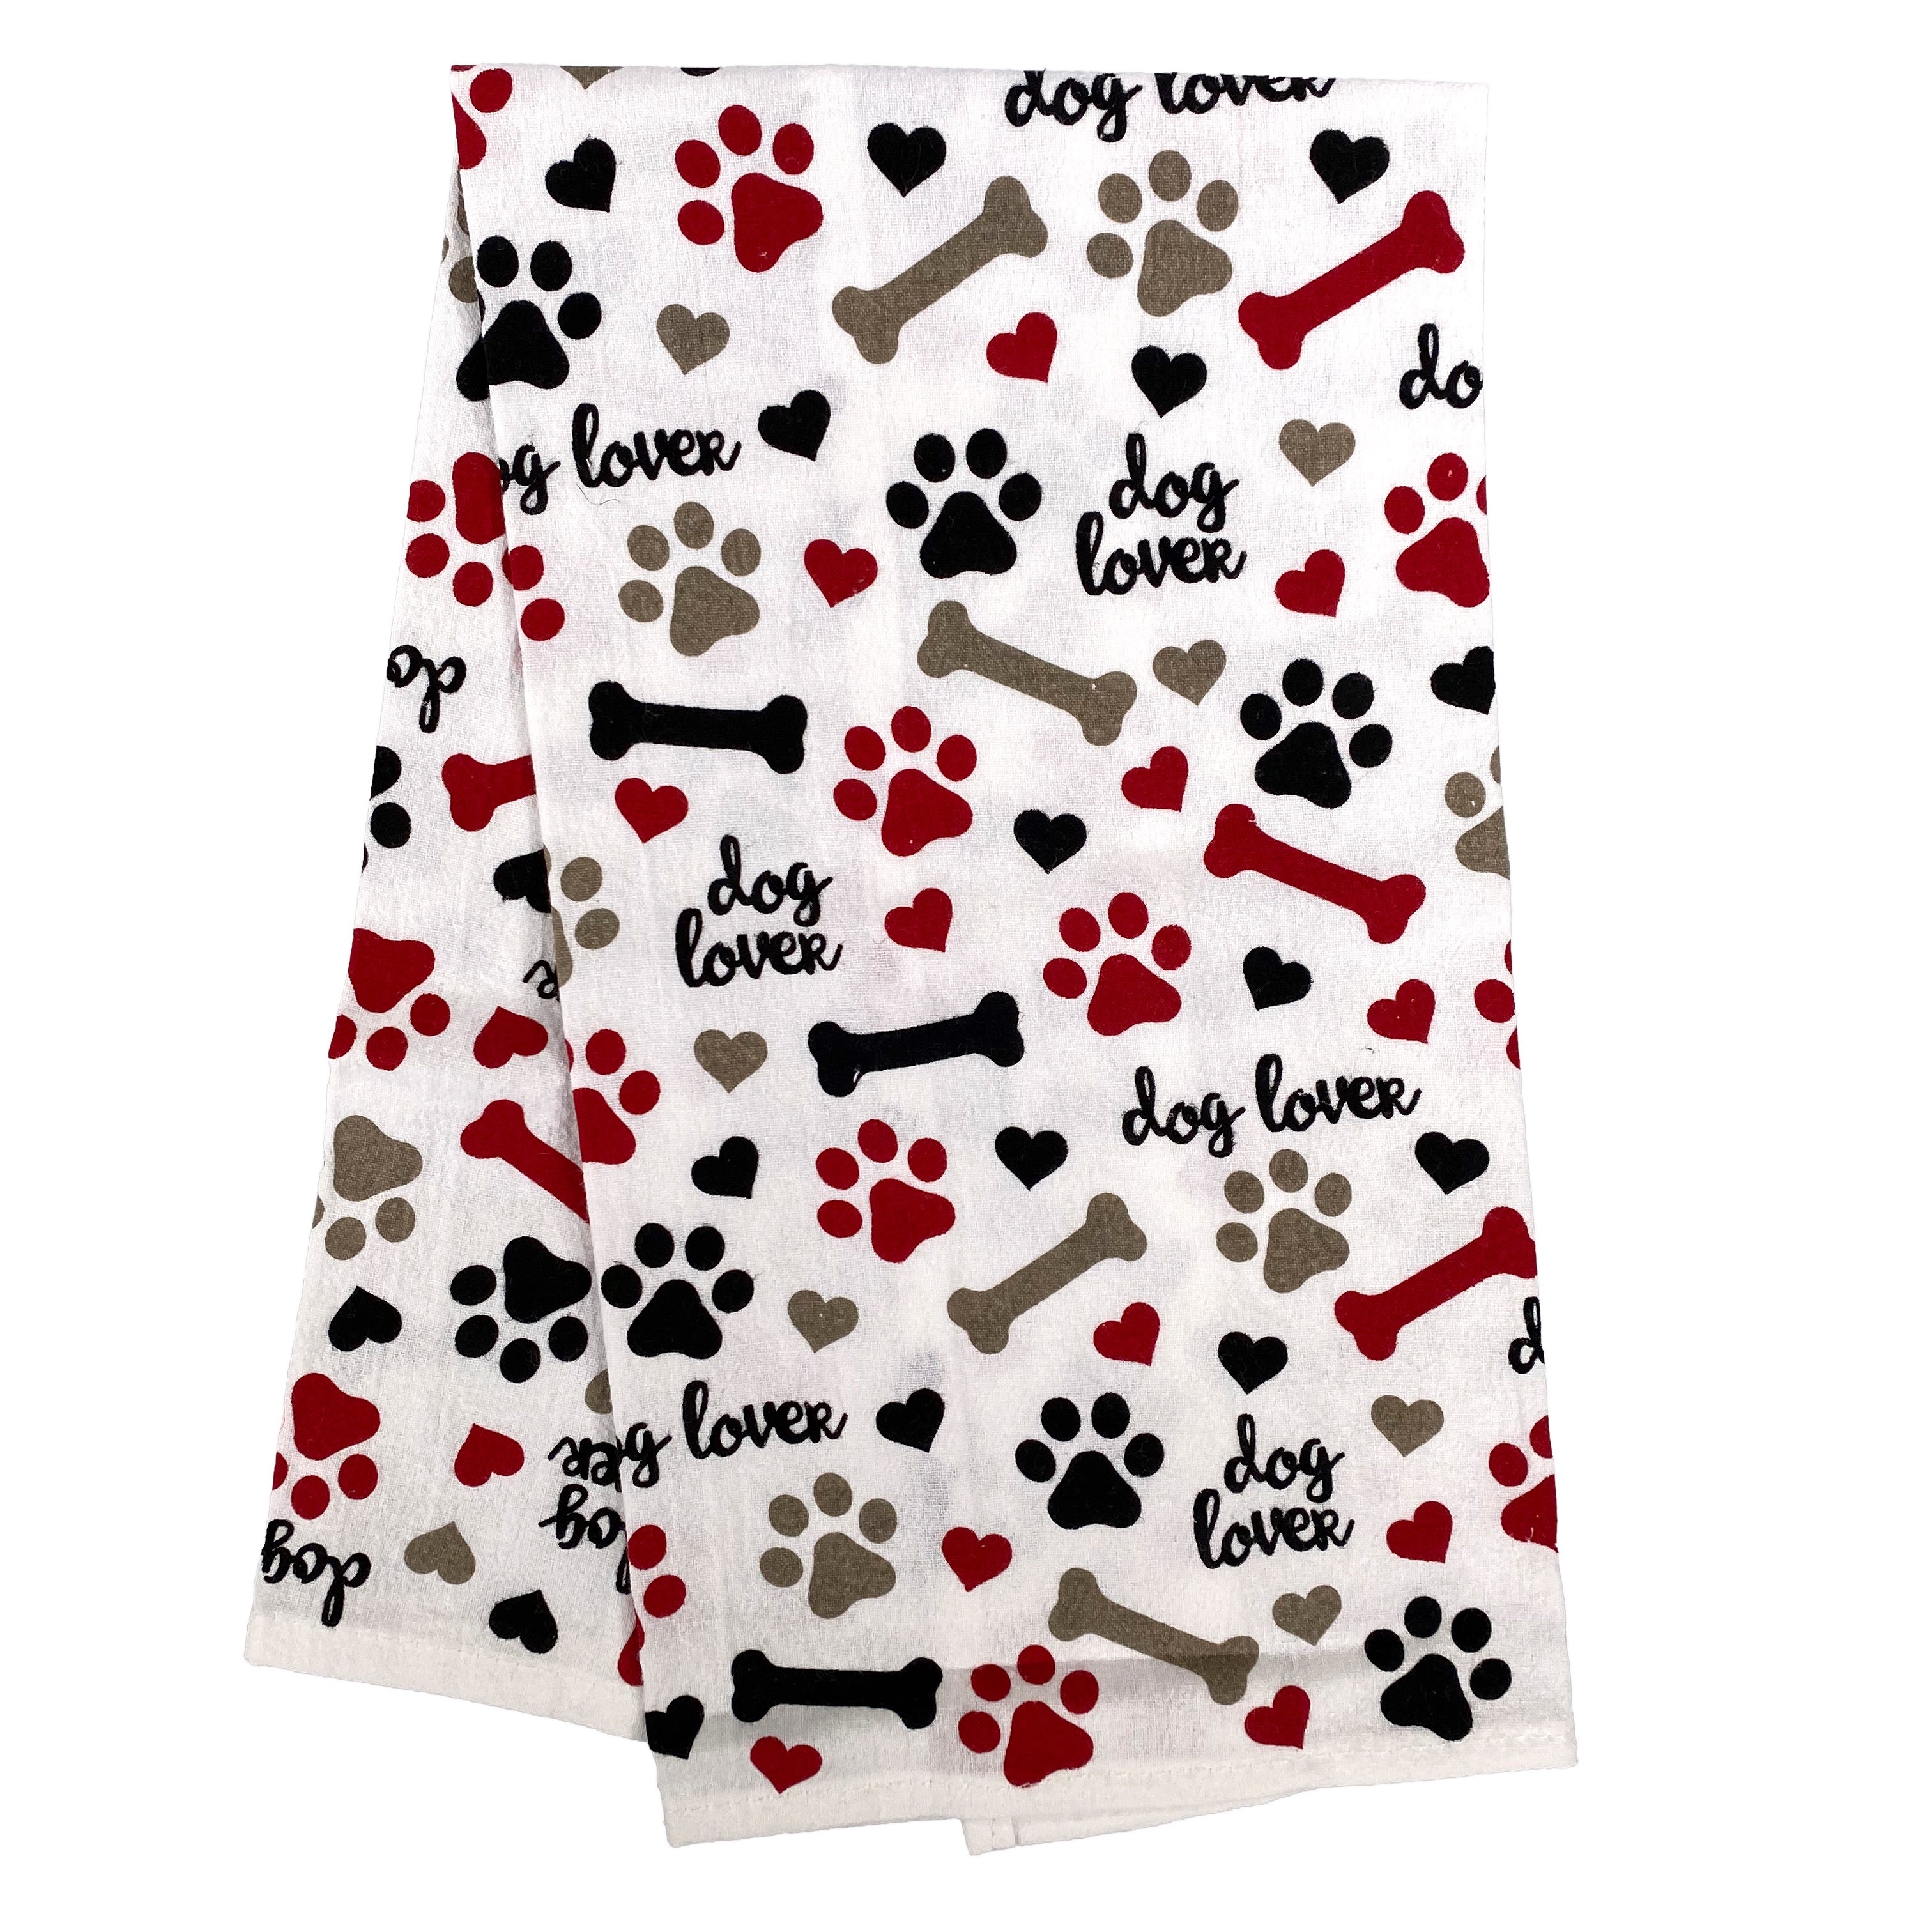 All Over Dog Lover - Printed Flour Sack Towel    